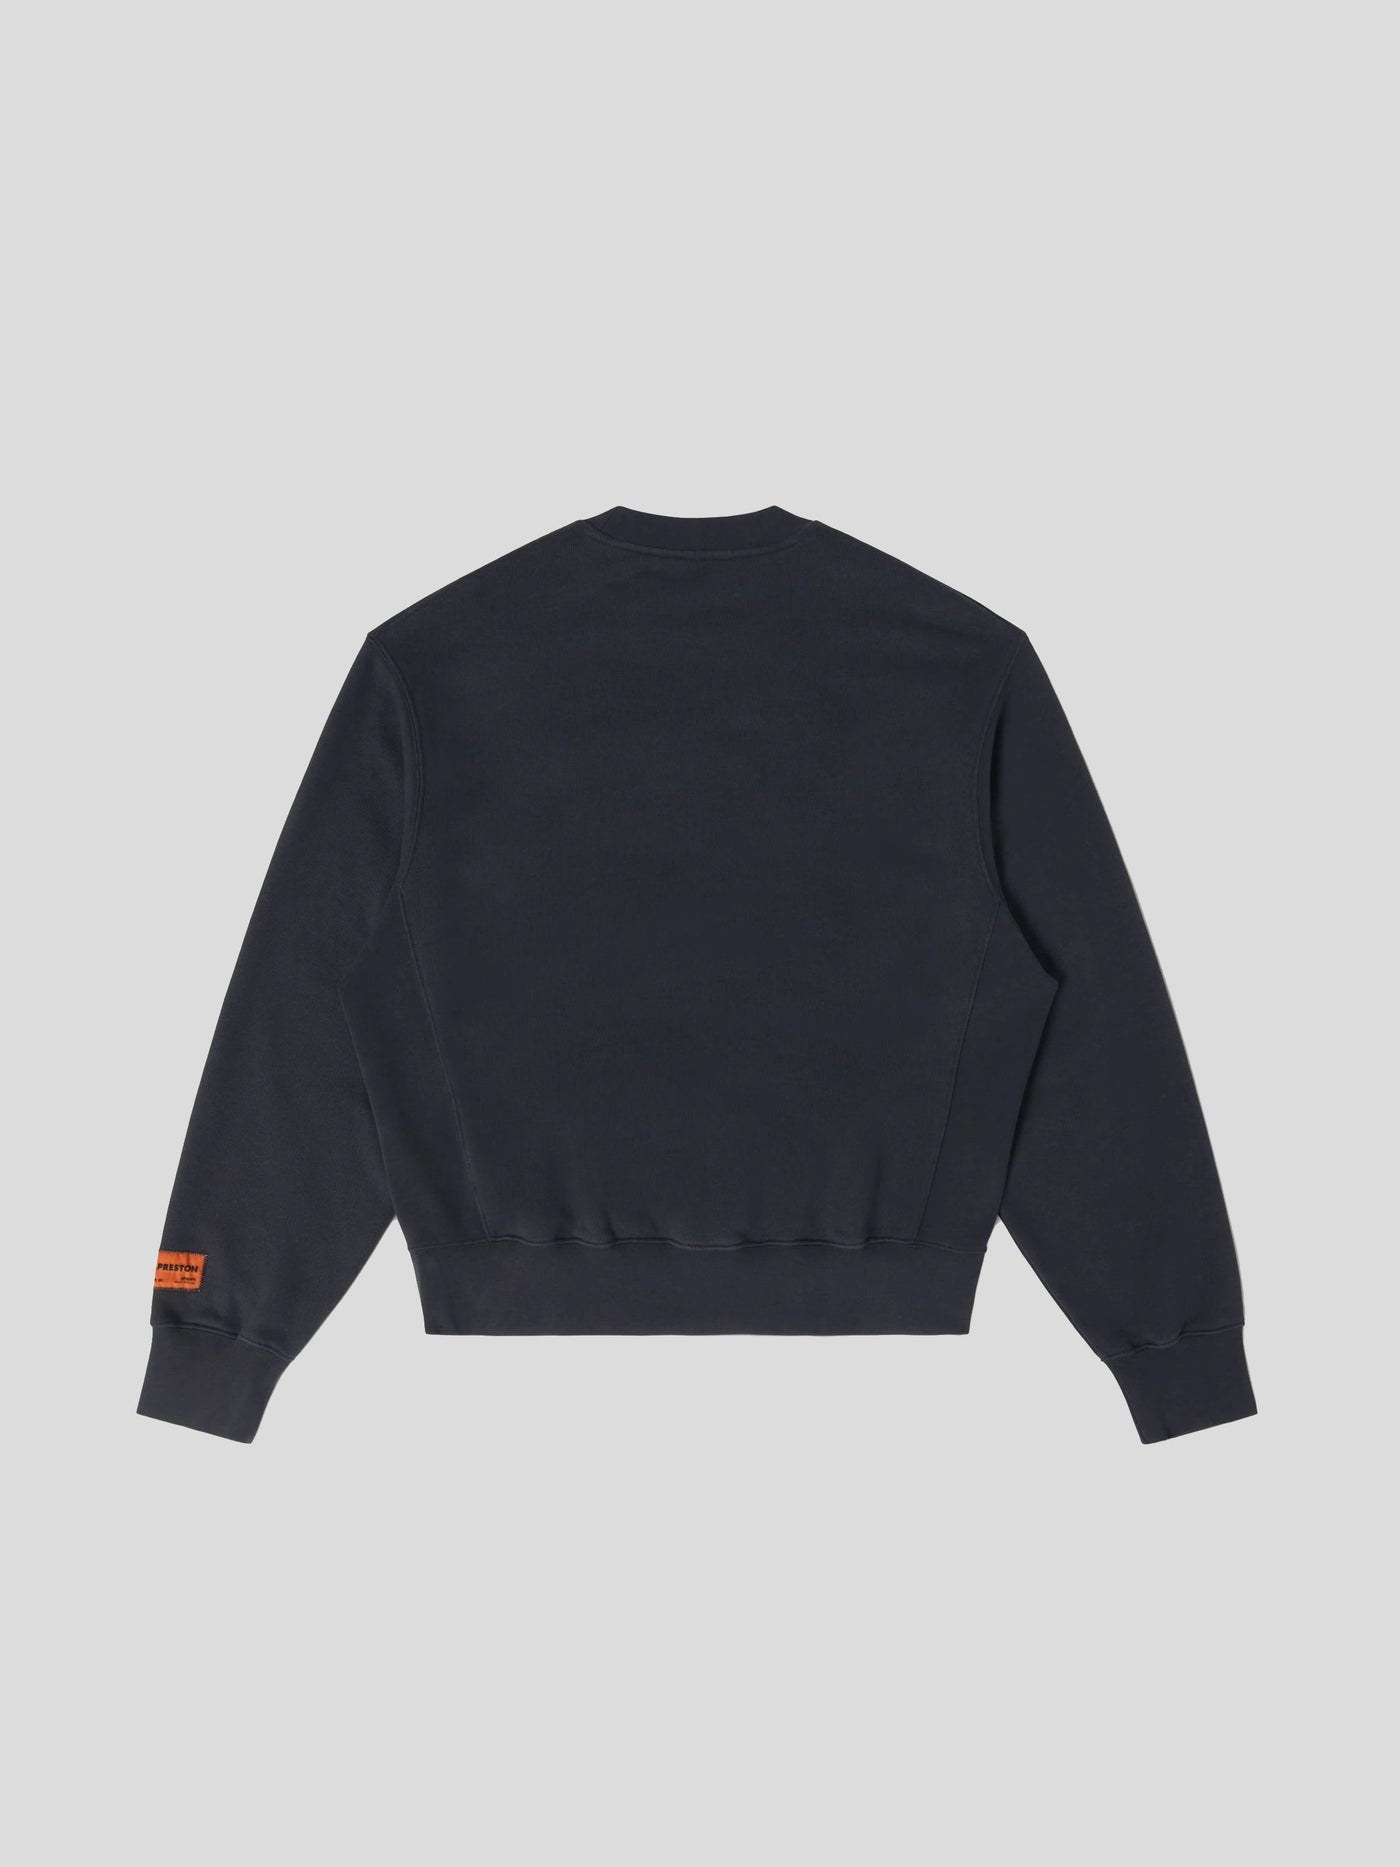 HERON PRESTON Sweat | Sweatshirt Reiher Print schwarz | HMBA020S23JER0021001 S / ADAM/EVE